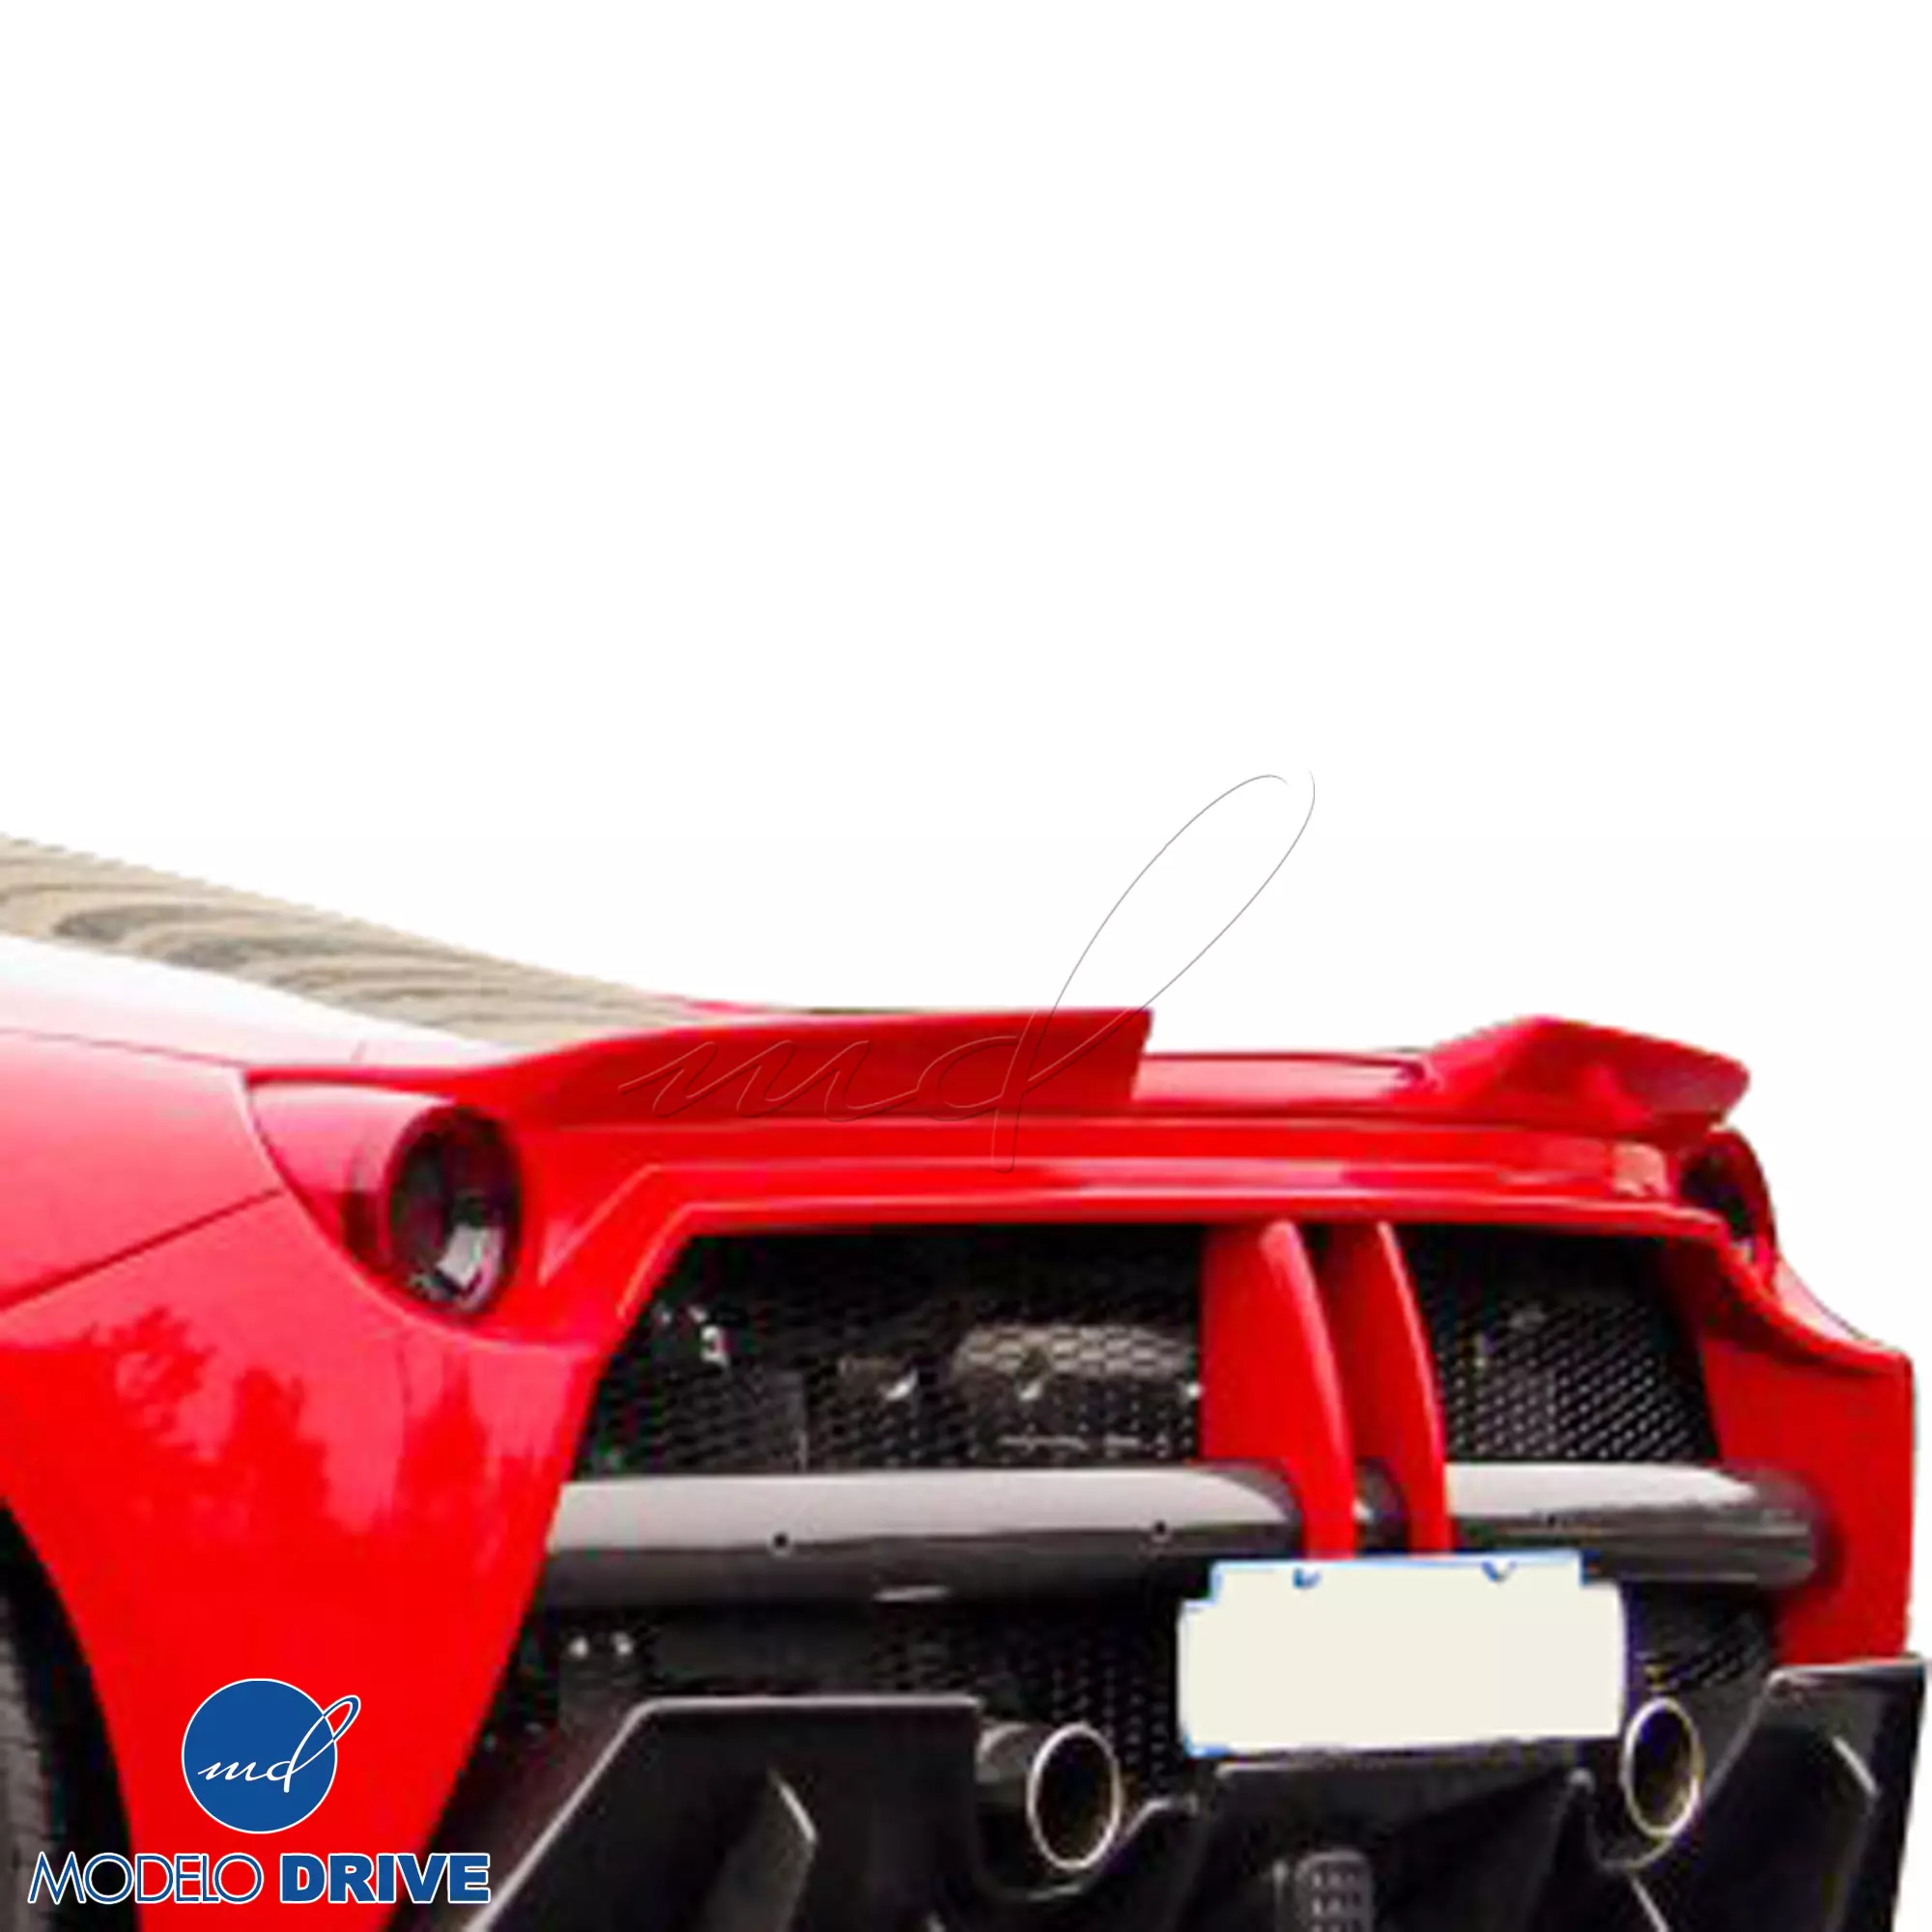 ModeloDrive Partial Carbon Fiber MDES Body Kit > Ferrari 488 GTB F142M 2016-2019 - Image 42